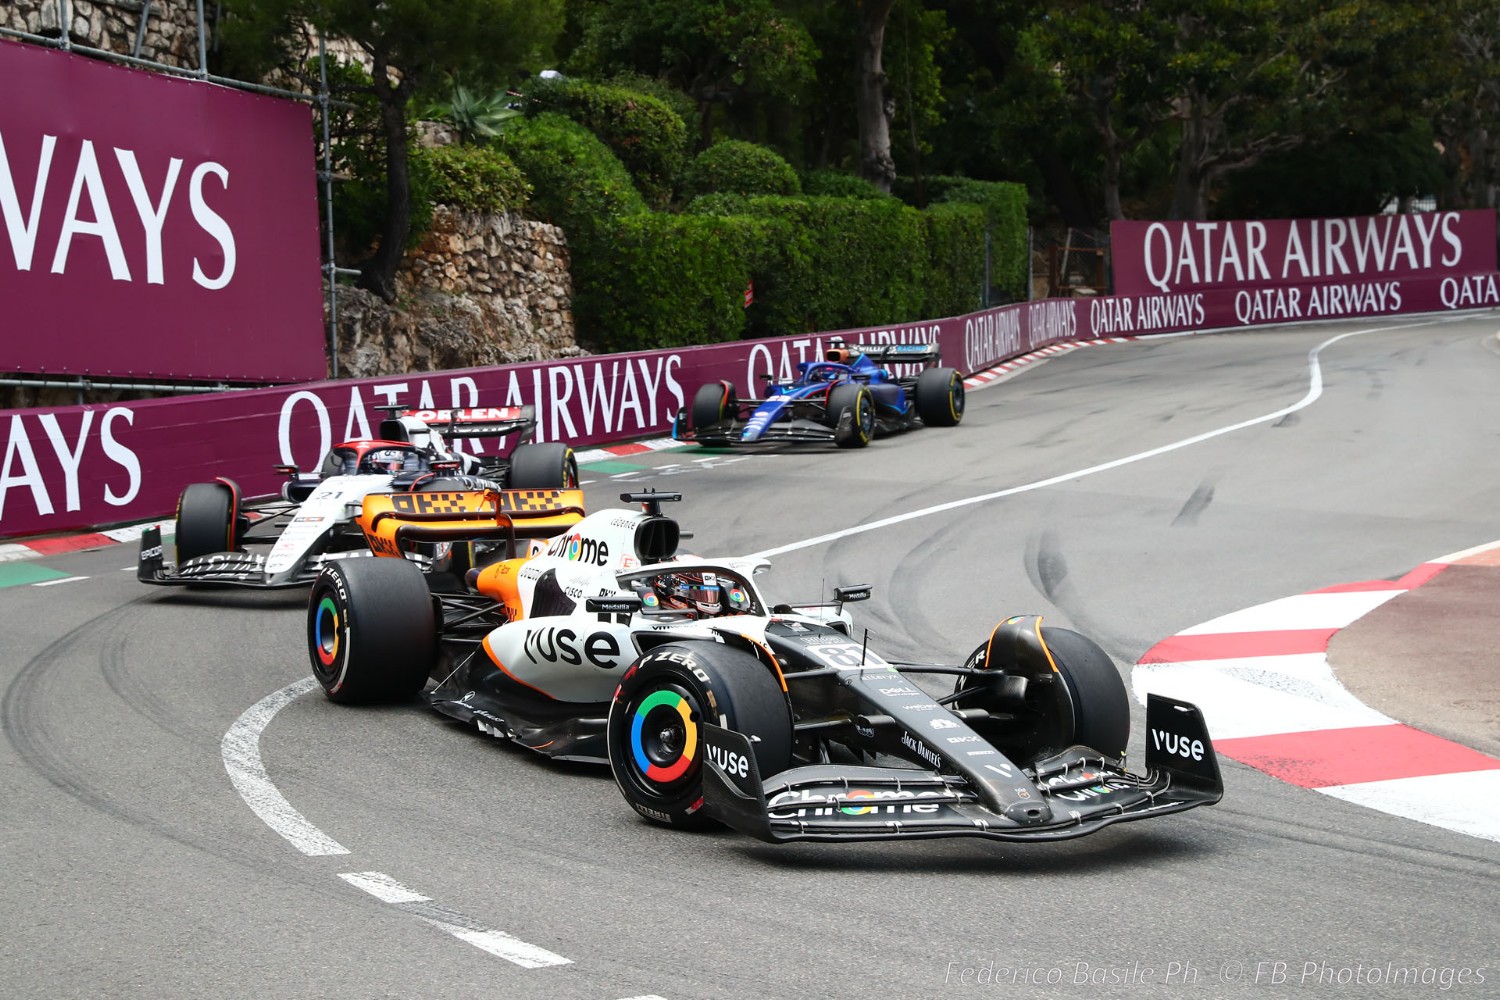 #81 Oscar Piastri, McLaren Mercdes during the Monaco GP, 25-28 May 2023 at Montecarlo, Formula 1 World championship 2023.